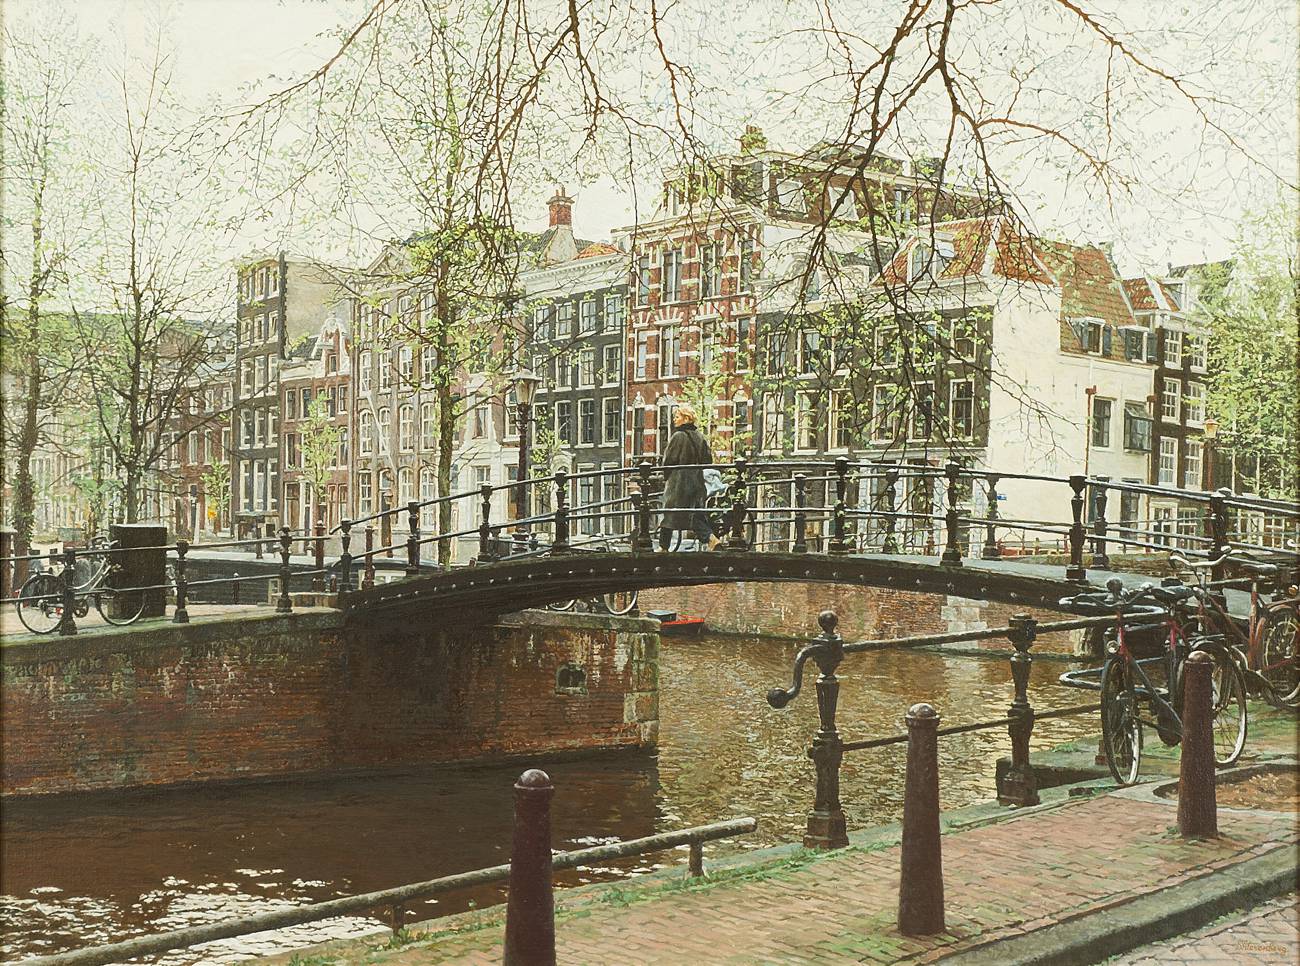 Brouwersgracht-Herengracht, Amsterdam (60 x 80), Igor Shterenberg 2001